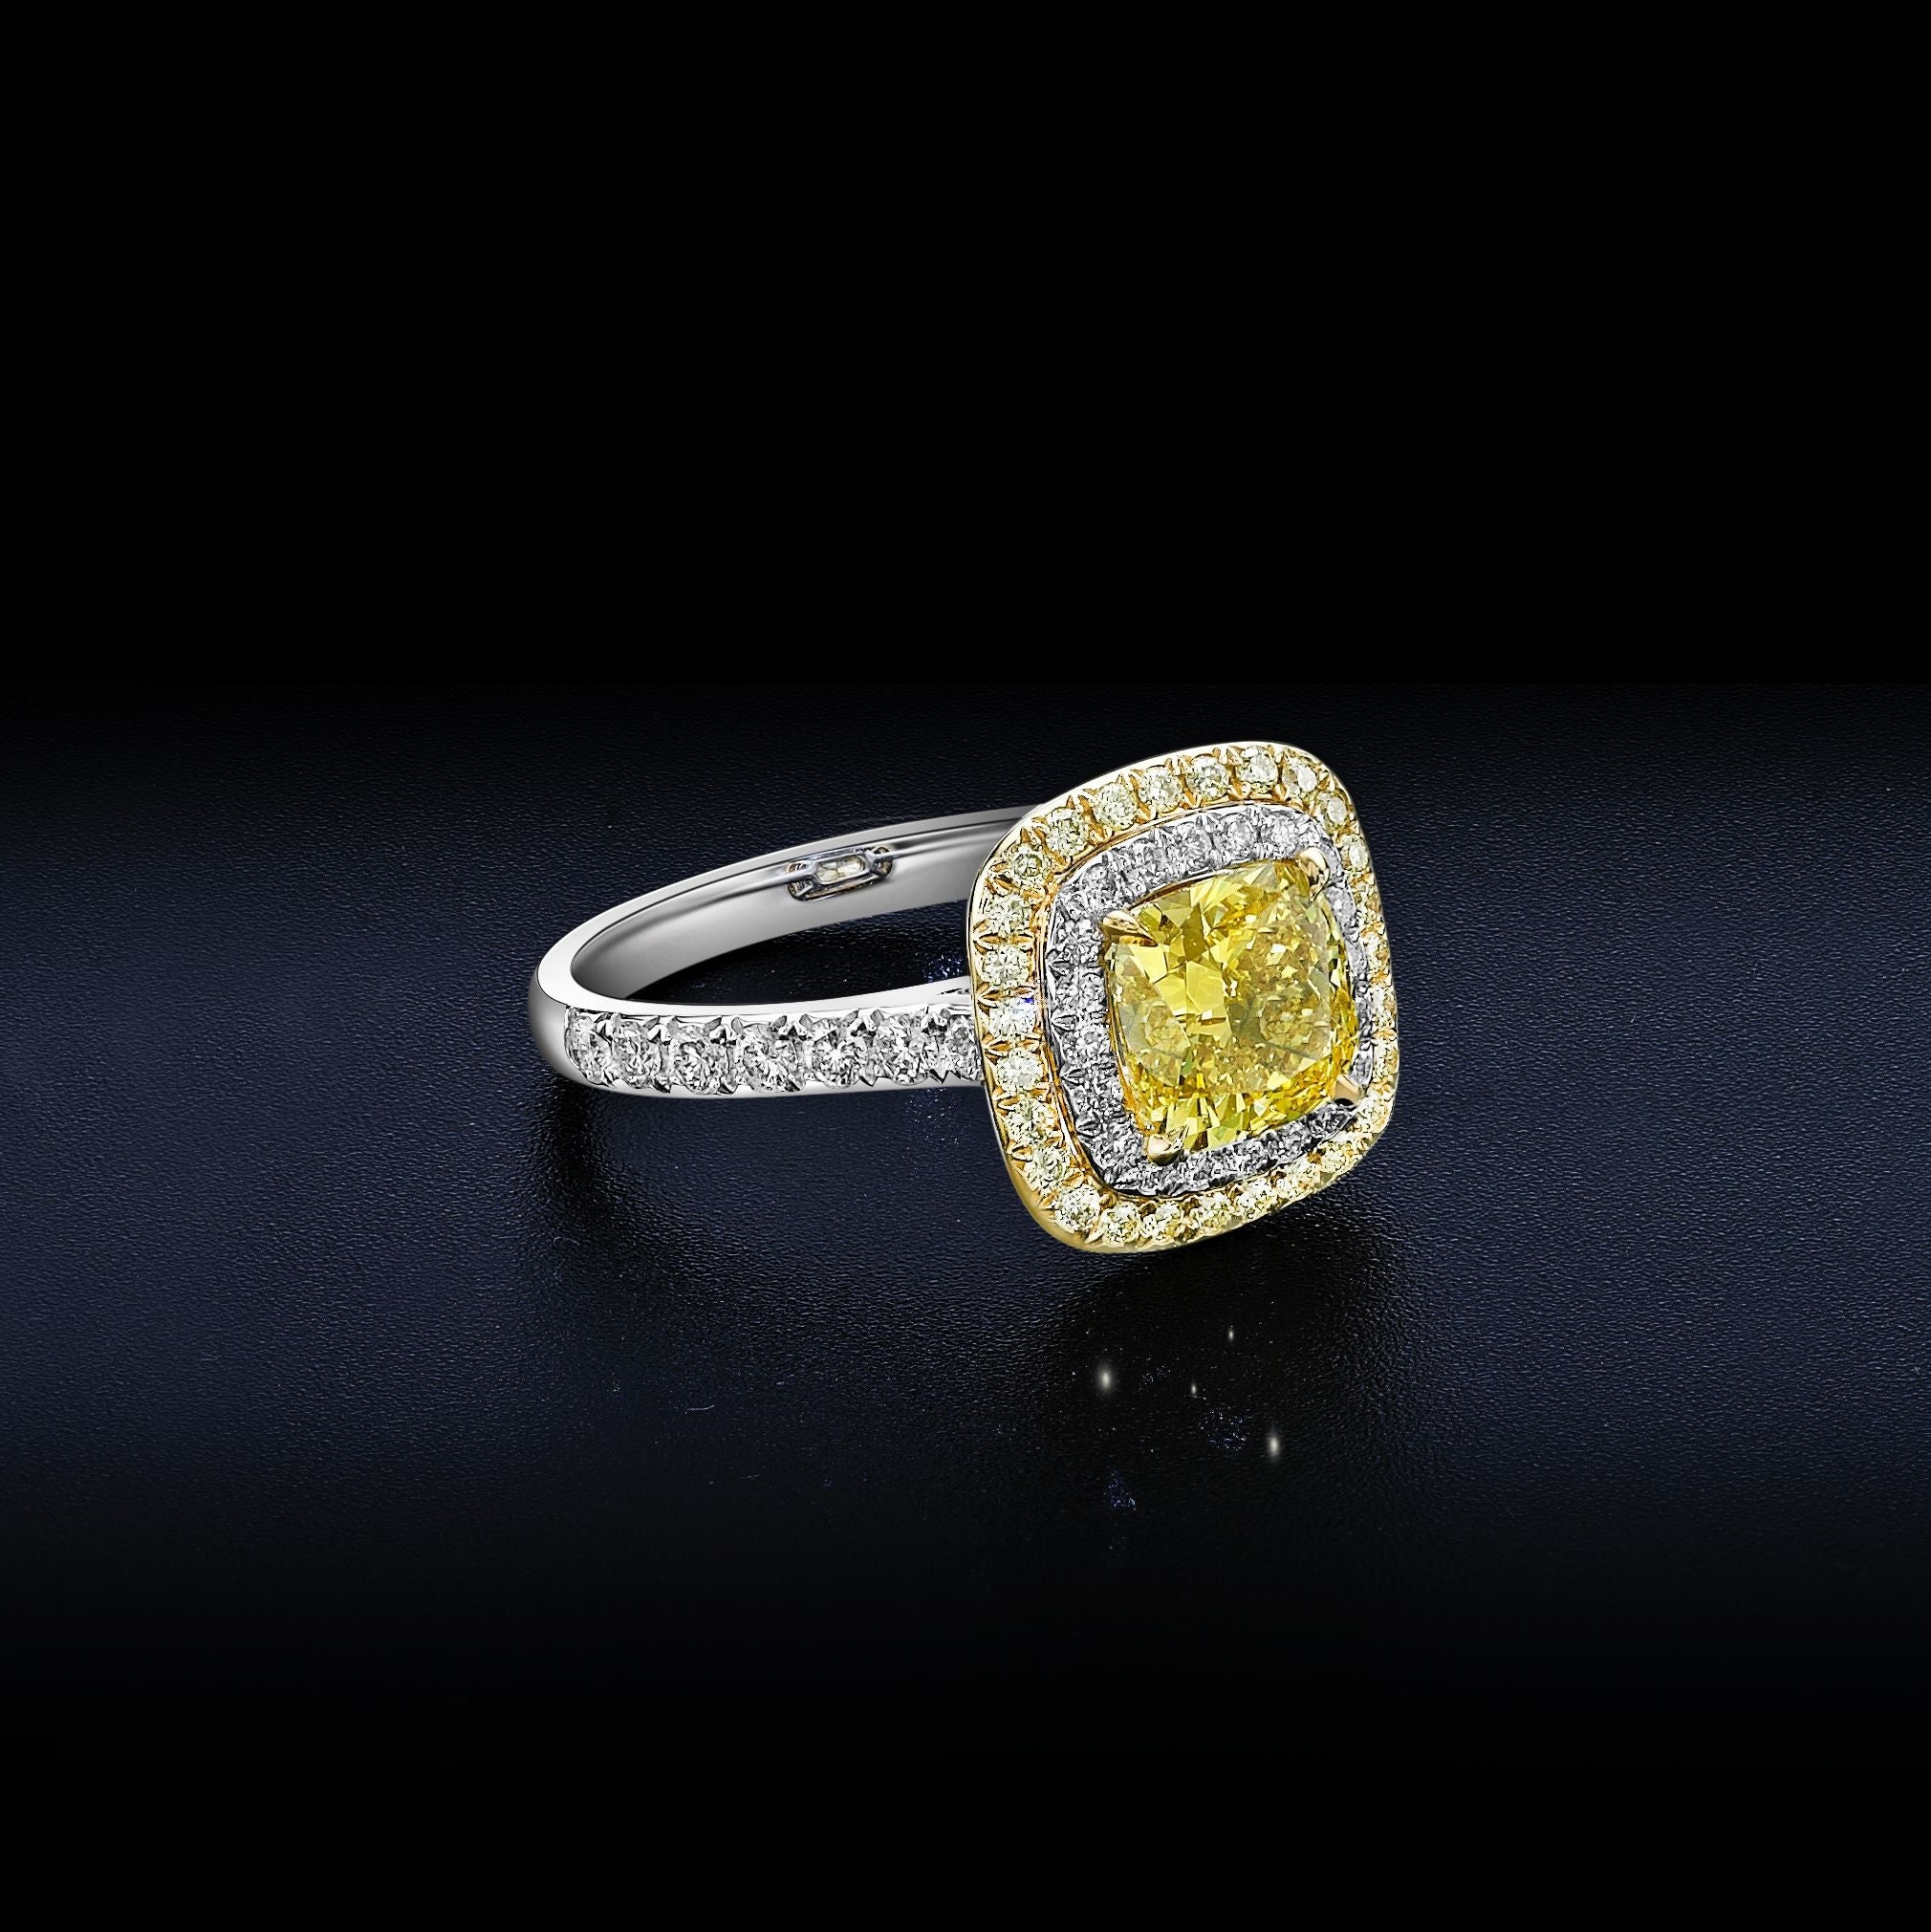 Vivid Yellow Diamond Halo Ring - 2.08ct TW